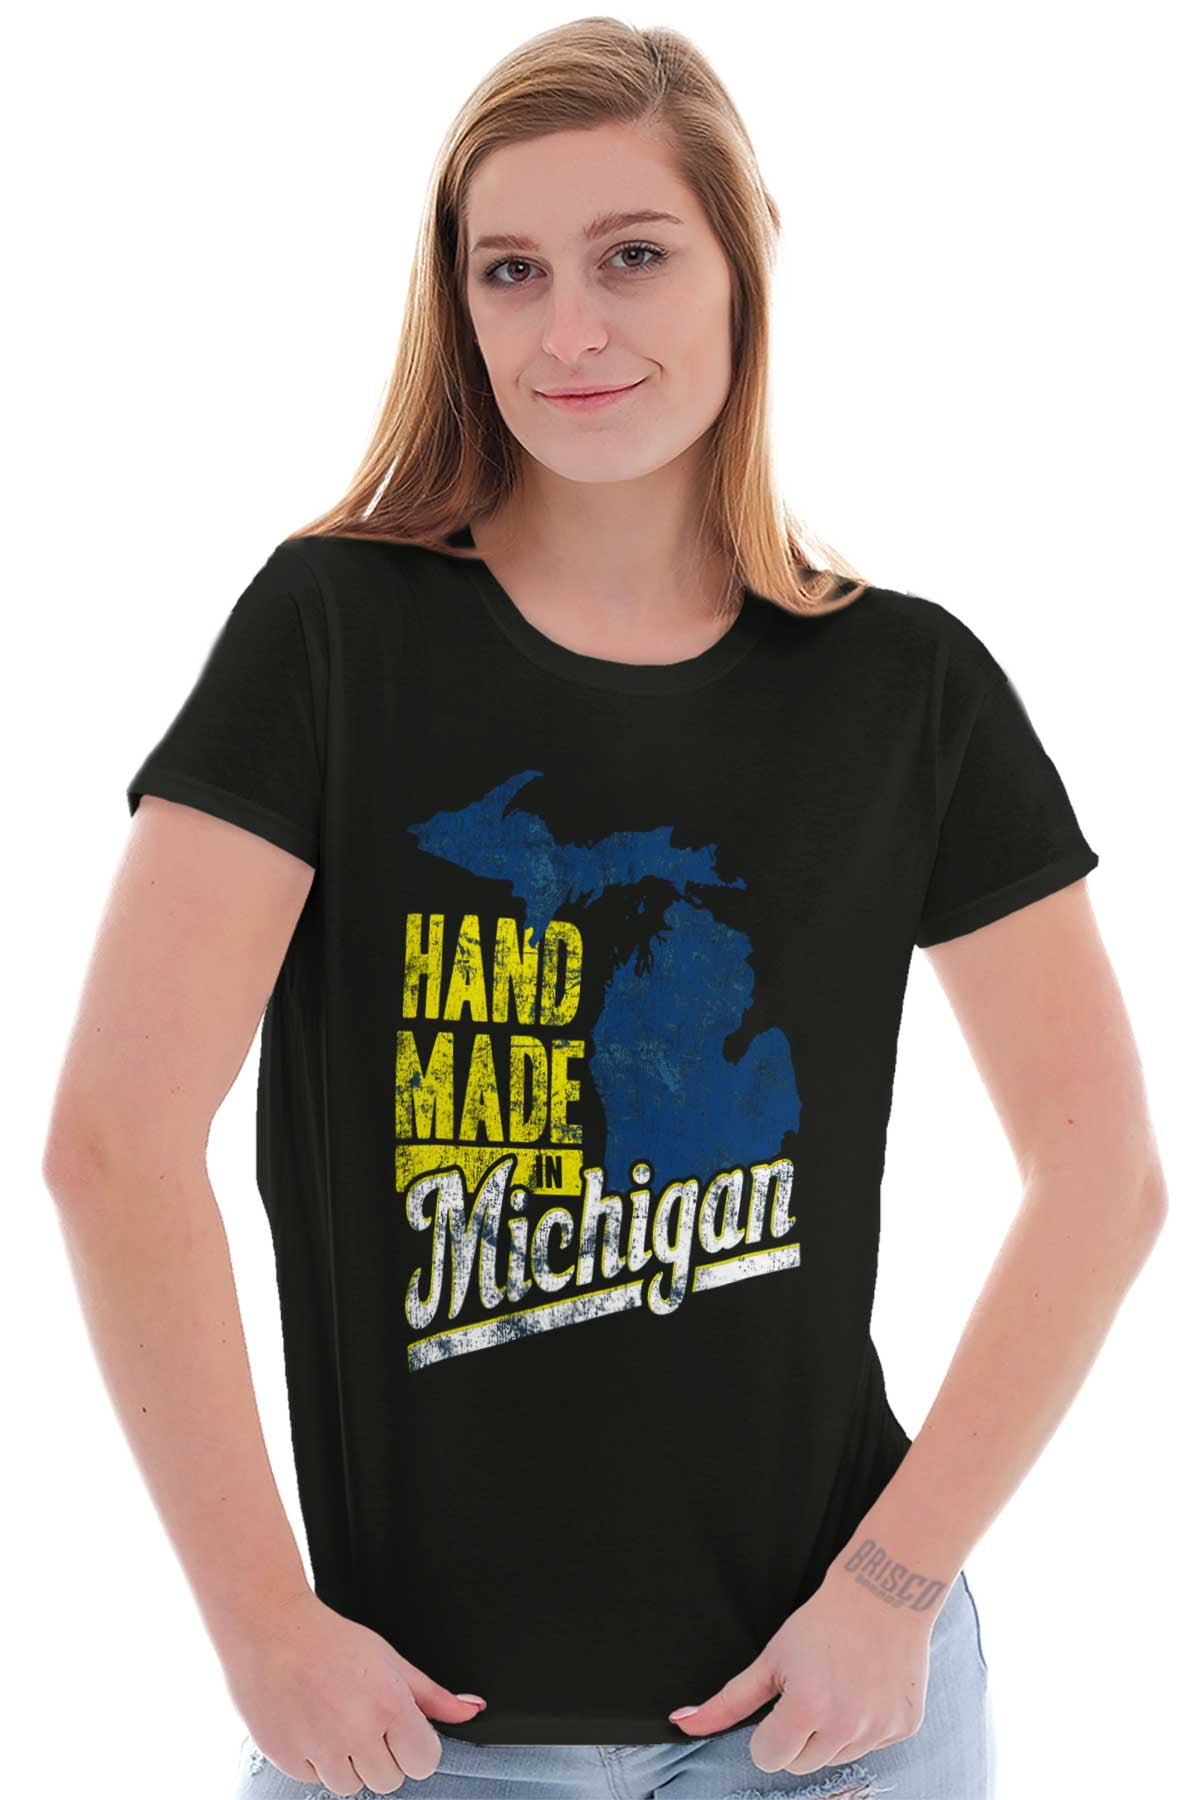 Iron Mountain Michigan MI Mich T-Shirt MAP